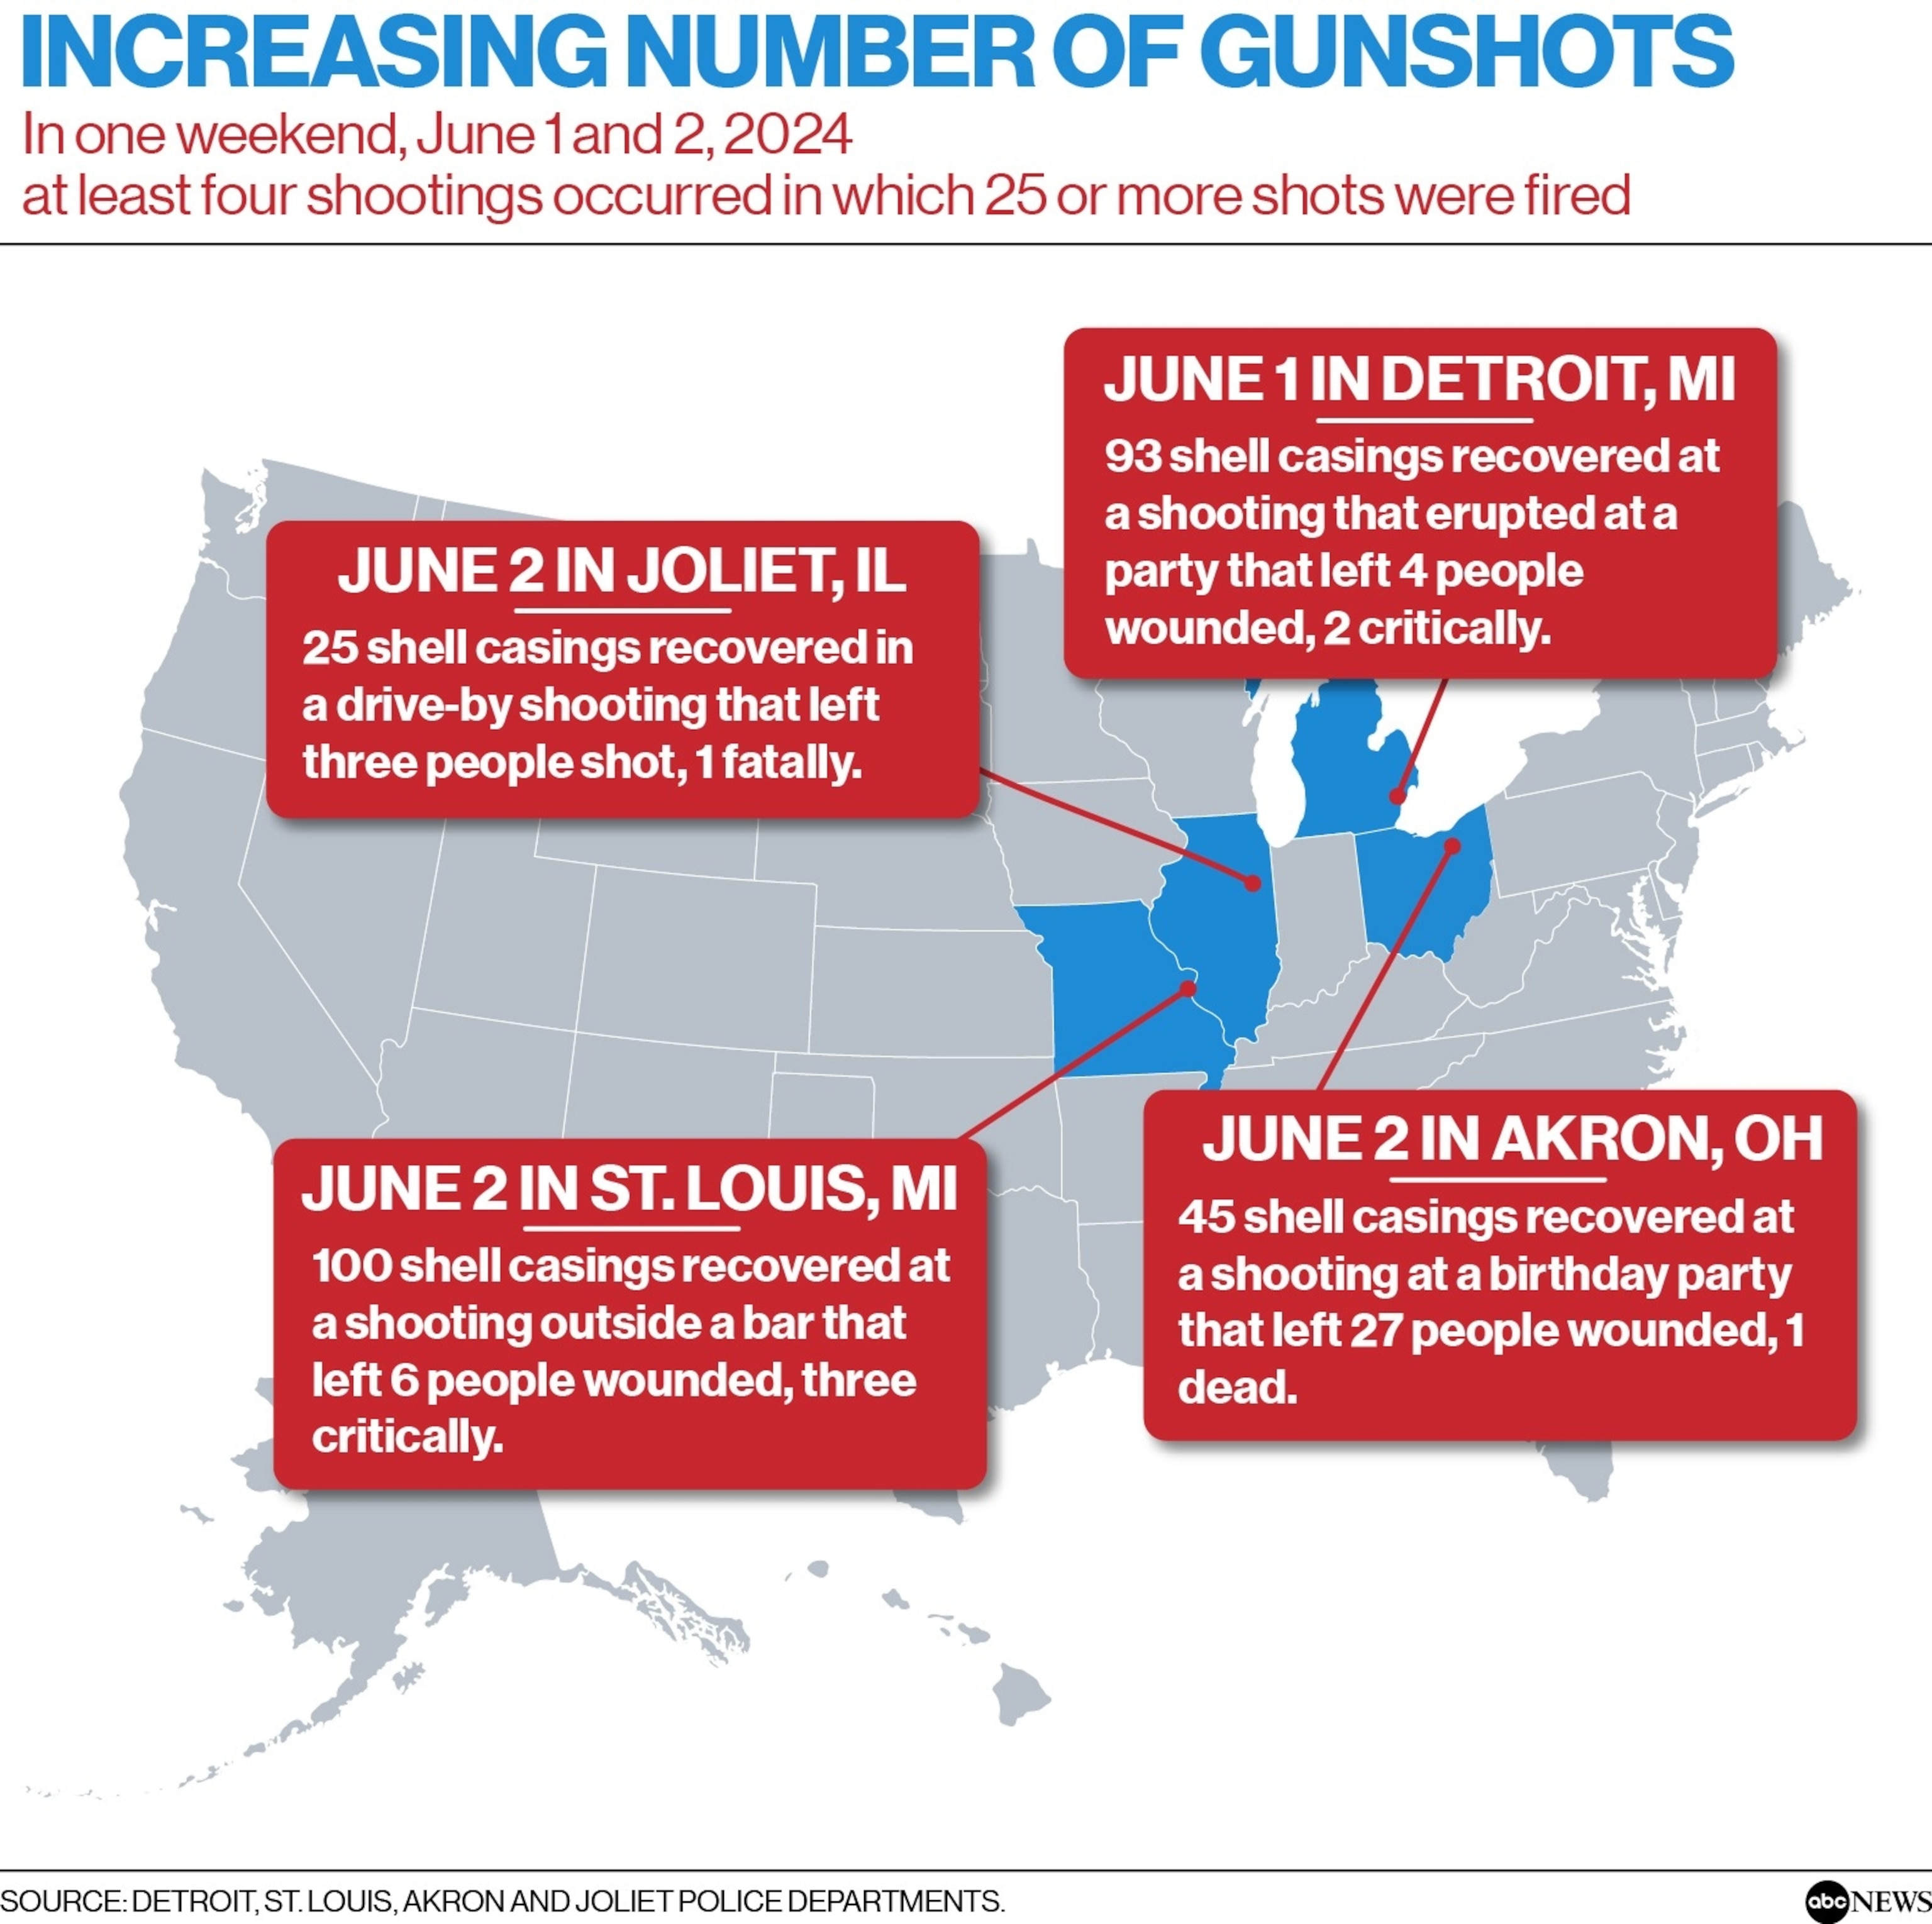 PHOTO: Increasing Number of Gunshots